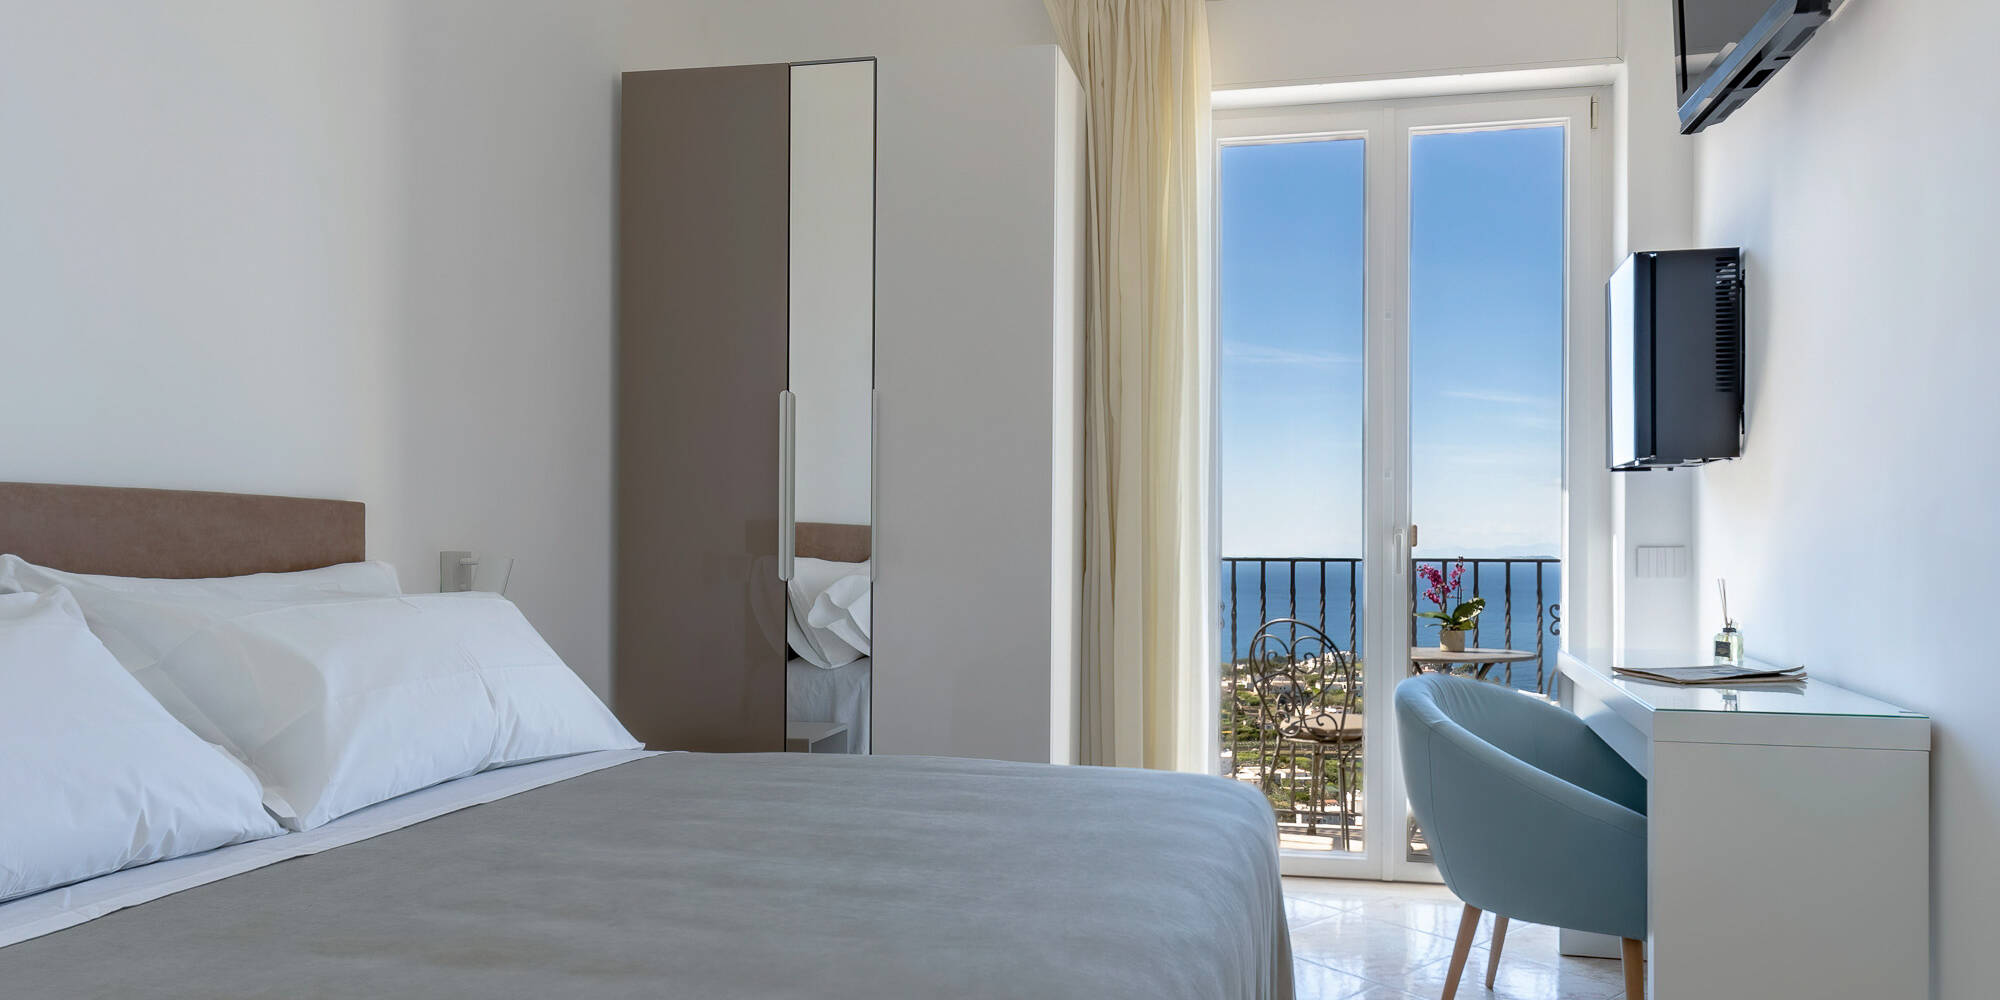 Charming Hotel<br>in the Center of Capri